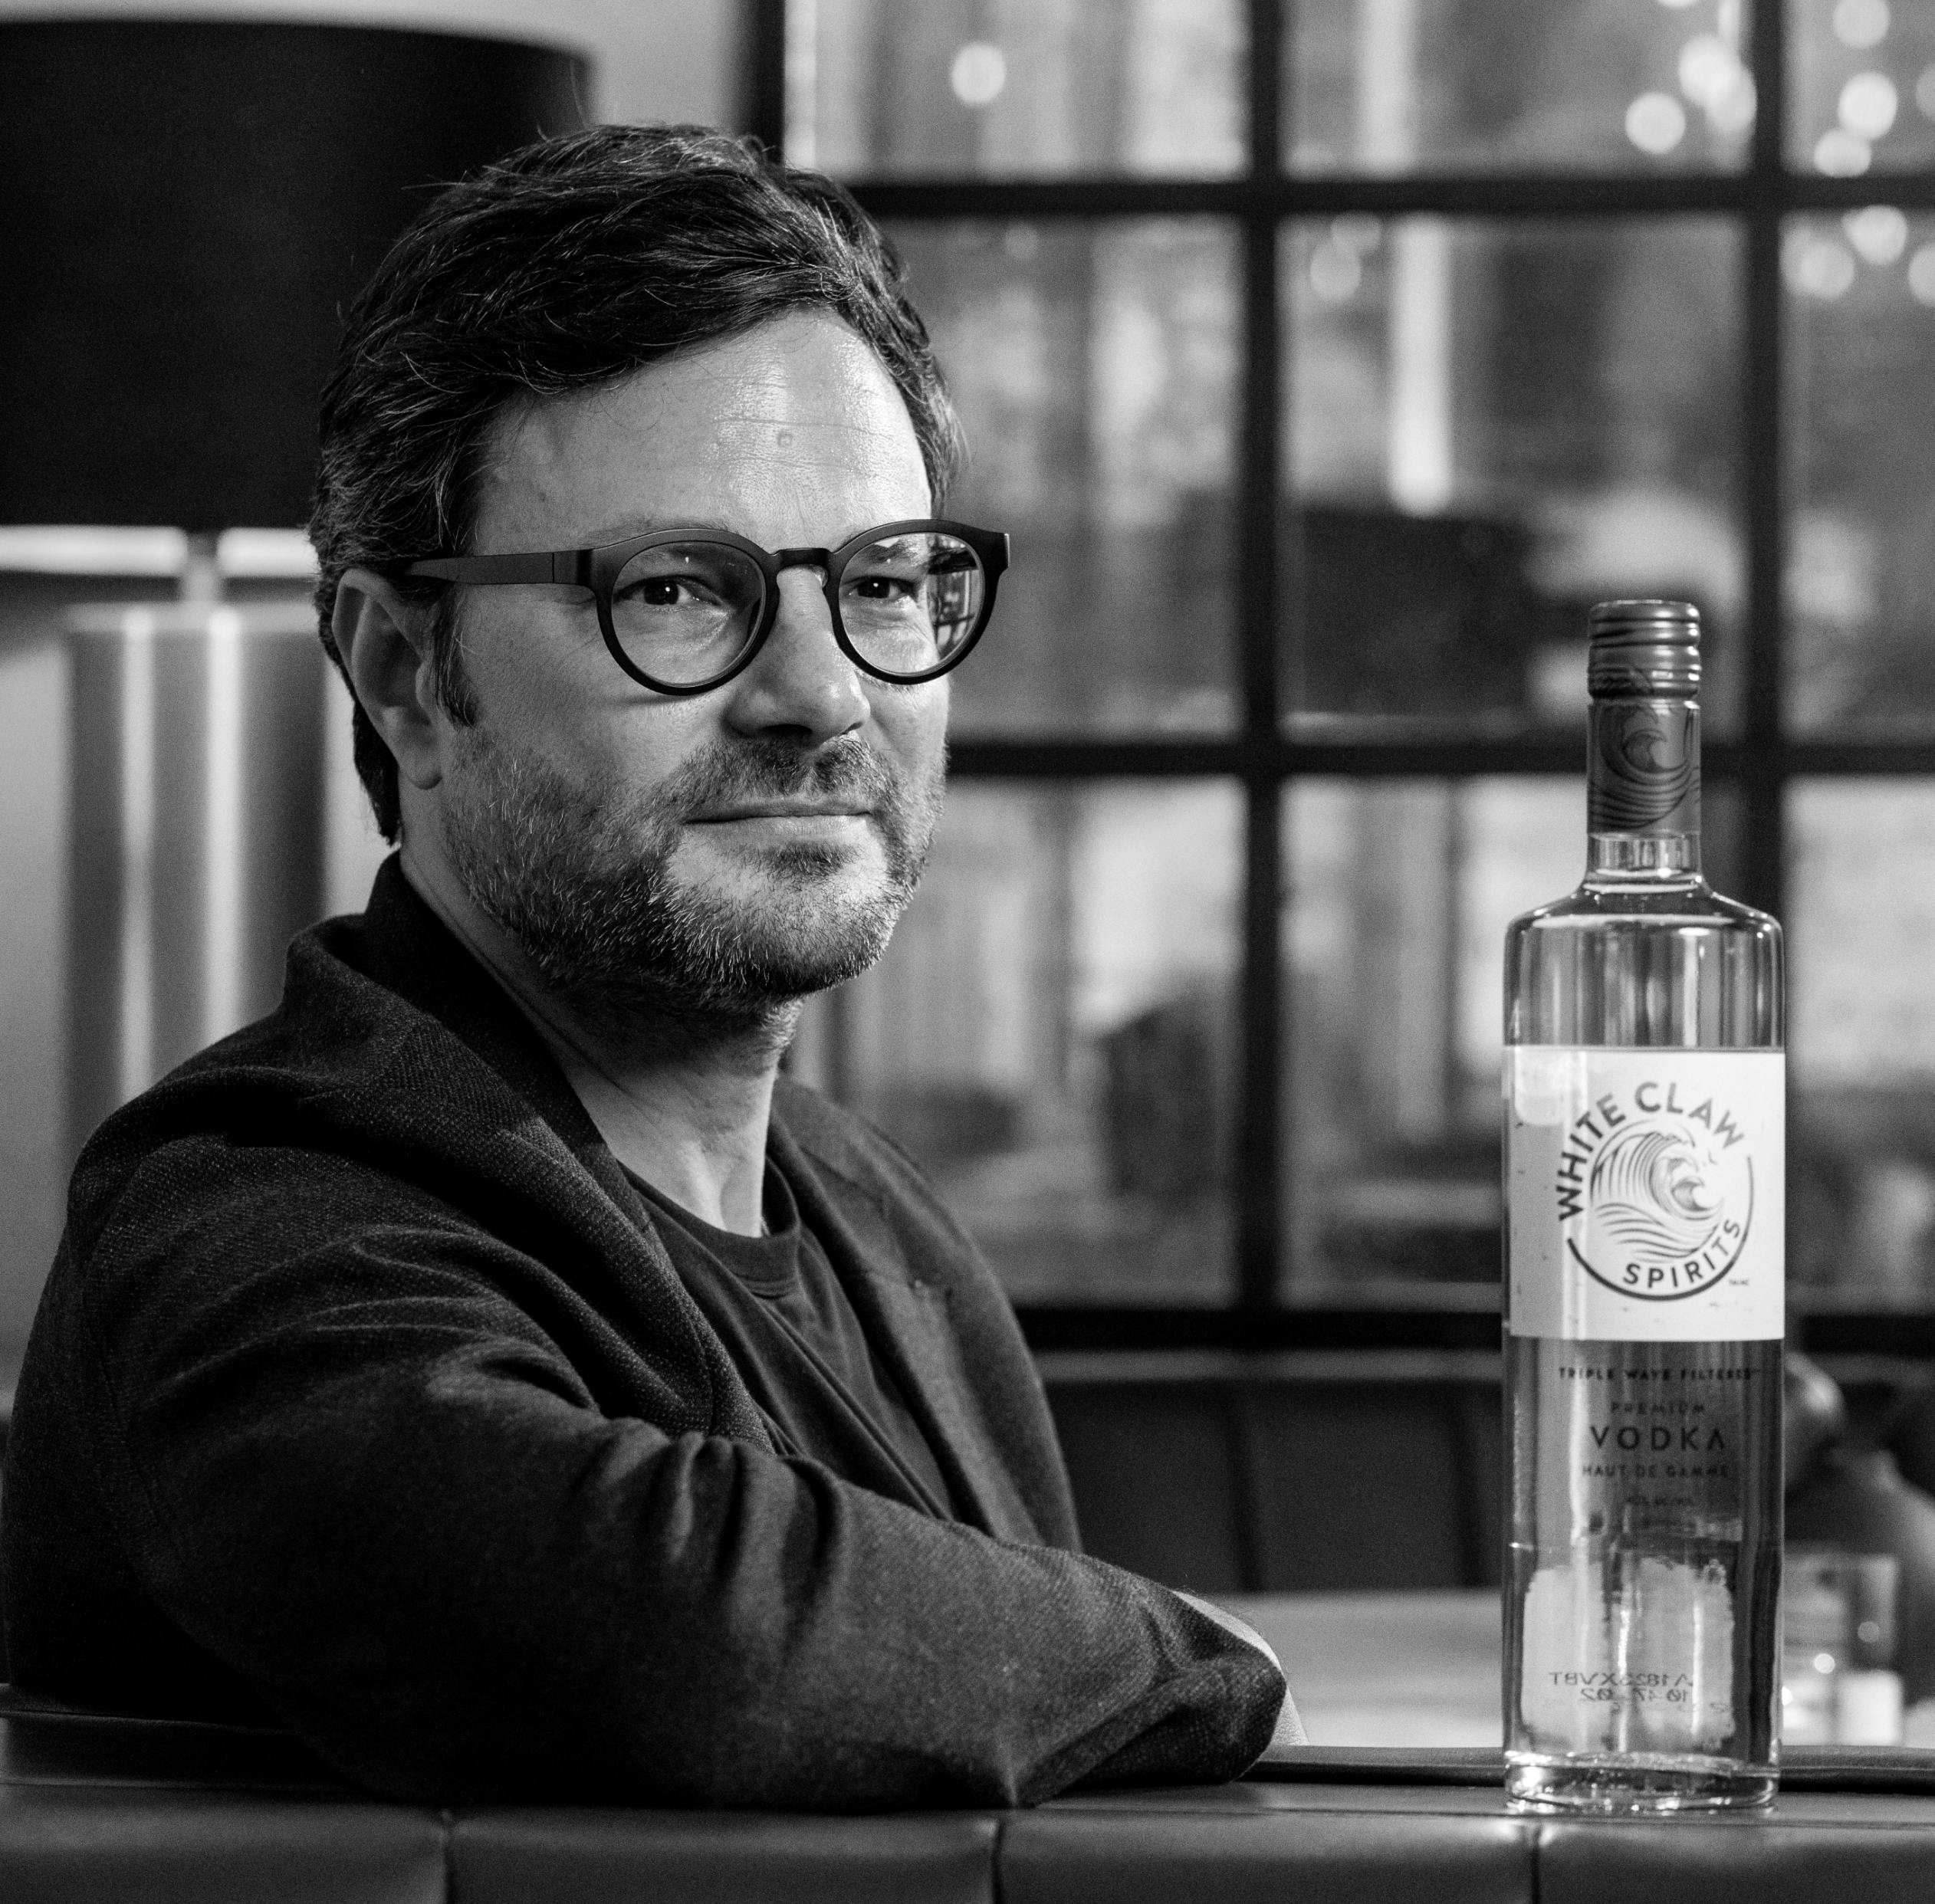 El maestro mezclador de vodka Andres Faustinelli posa junto a una botella de vodka White Claw™ Premium.		